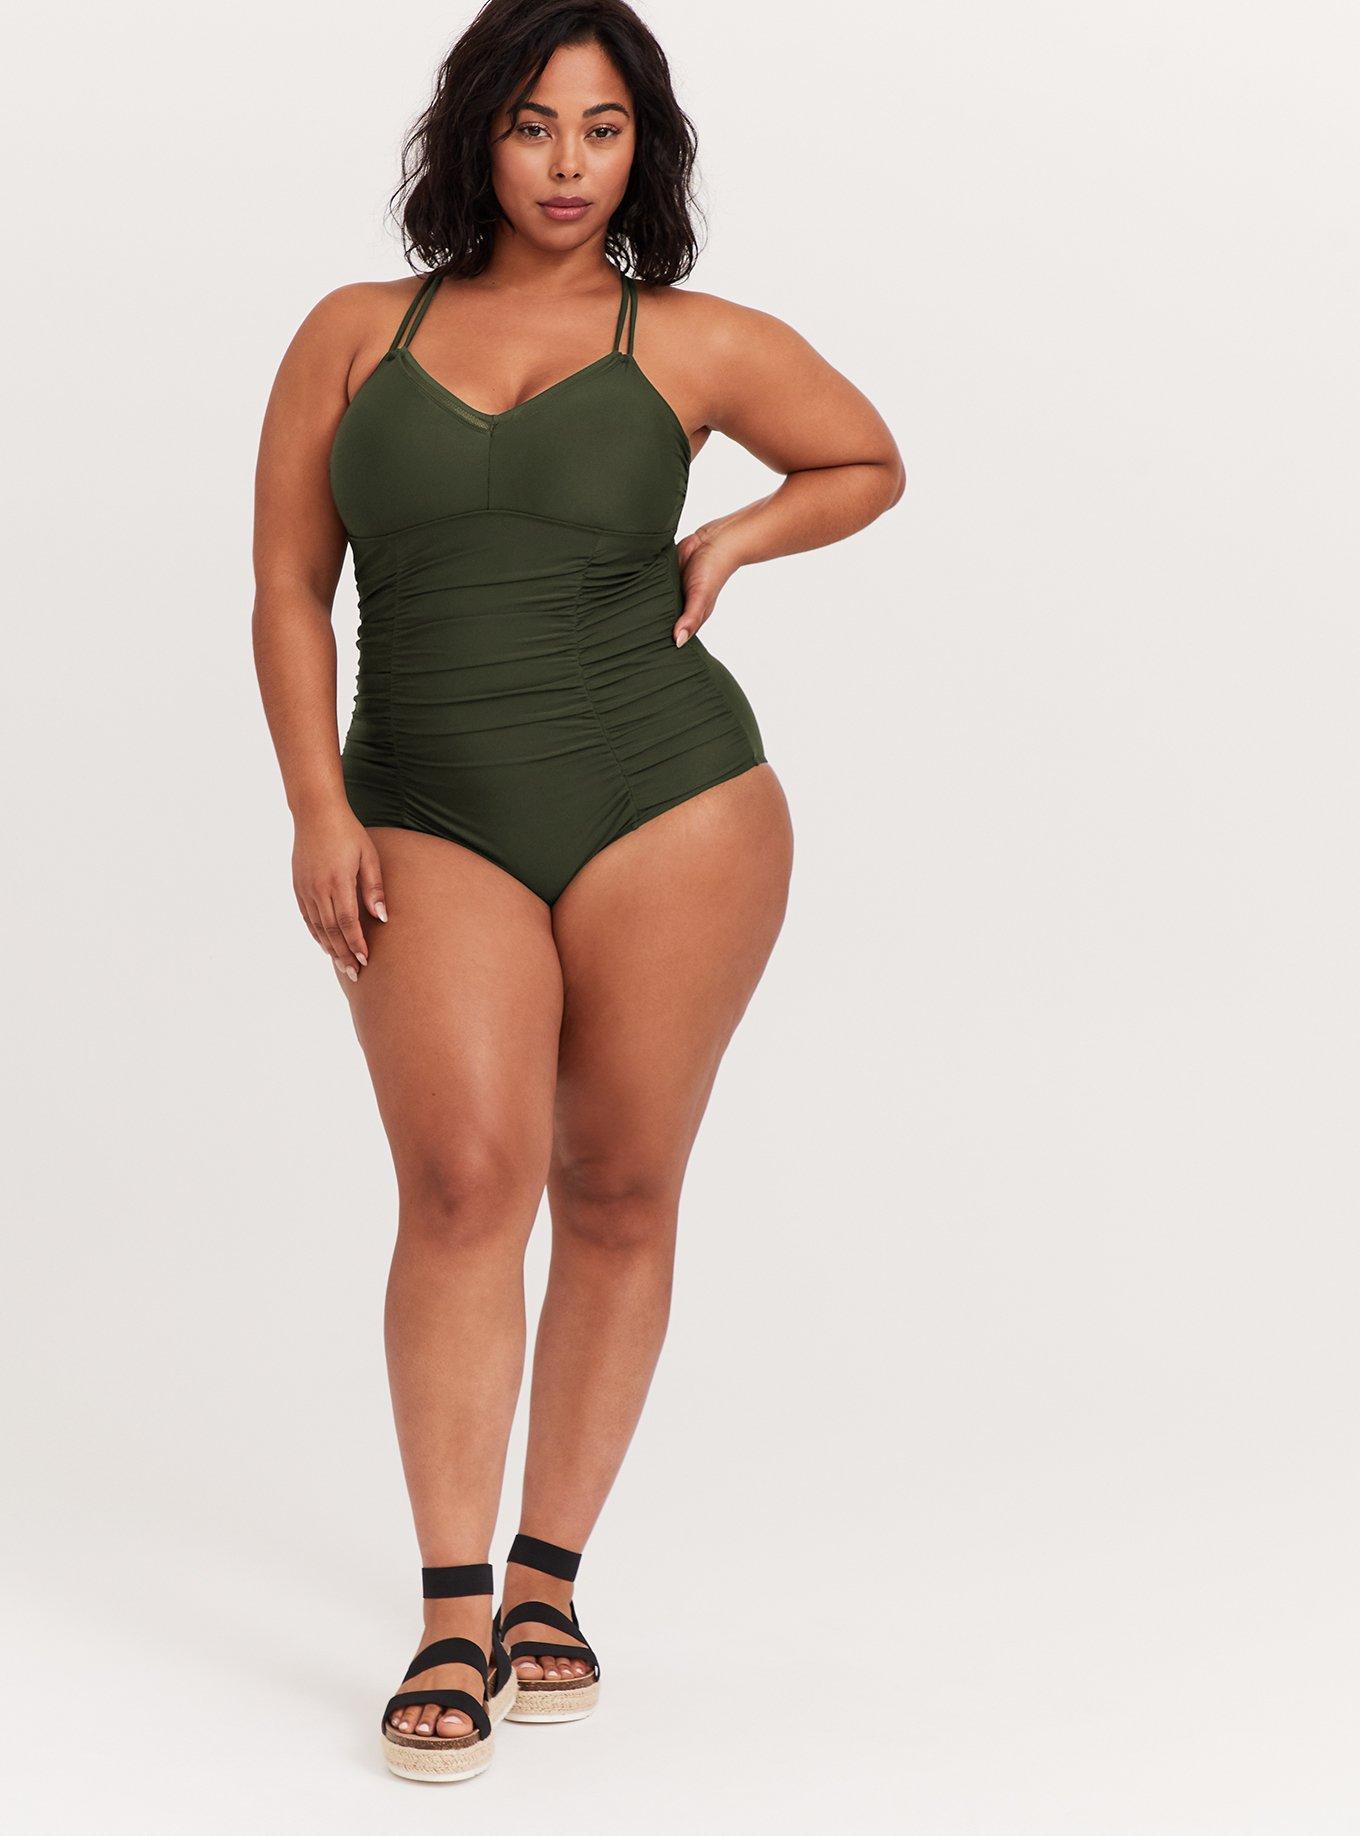 Plus Size Womens Swimsuit Fashion 1 Peice Bathing Suit Tank Olive Green 3X